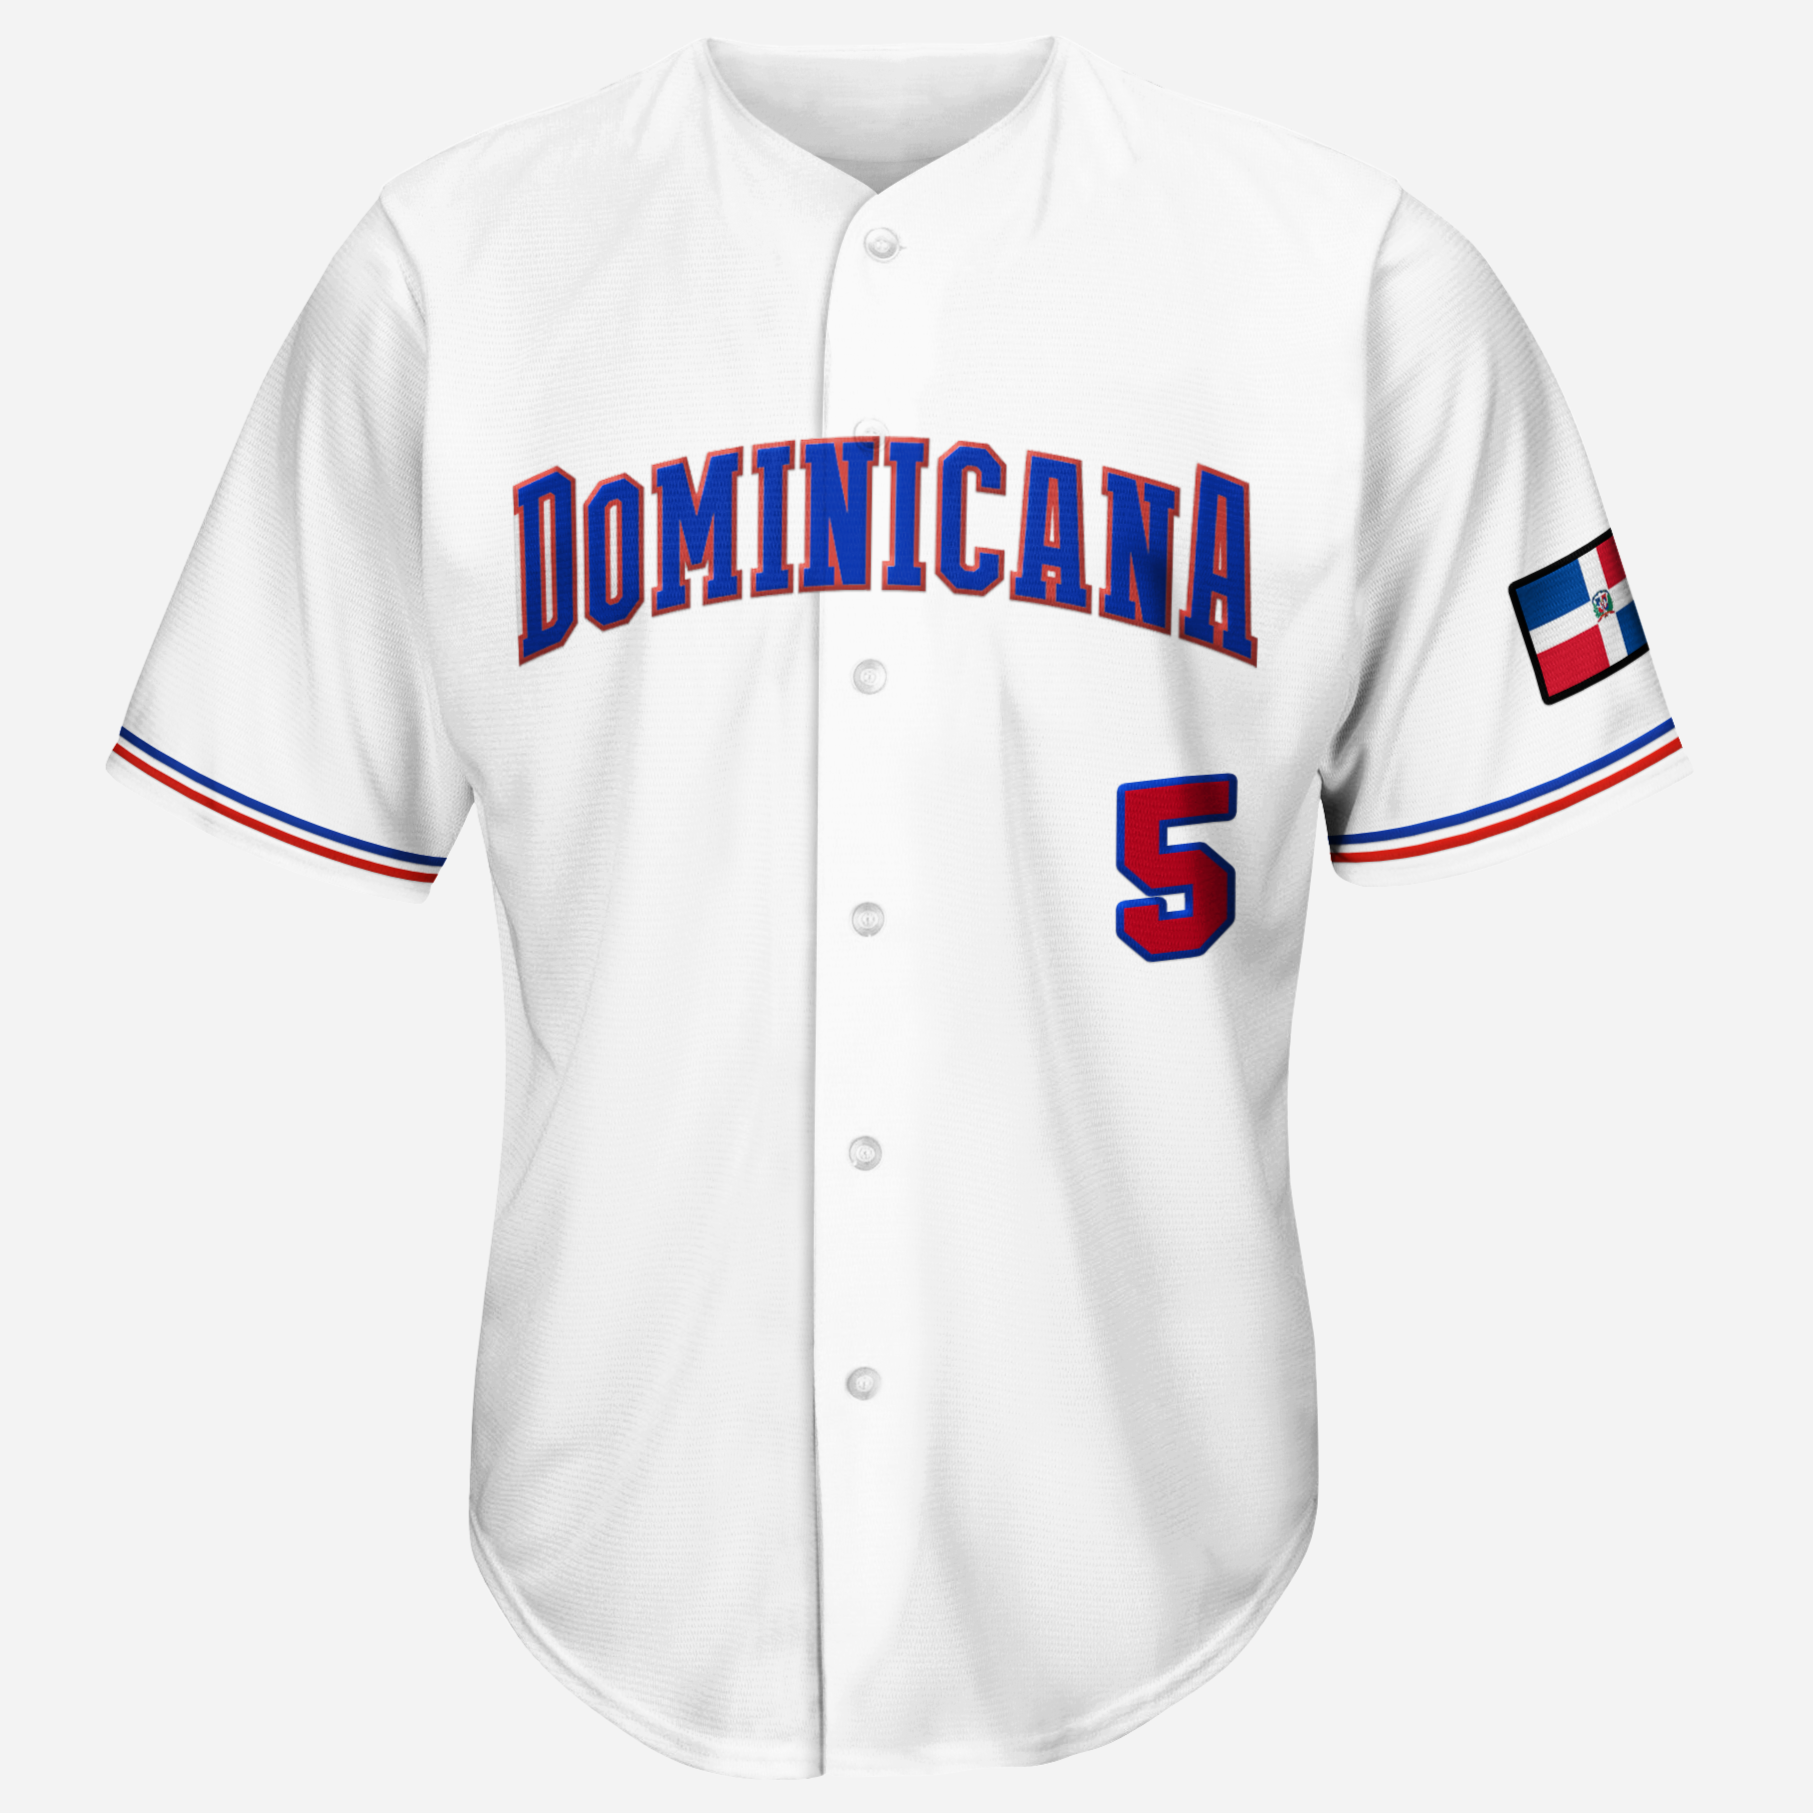 Dominican Republic Button up Classic Baseball Jersey Shirt 